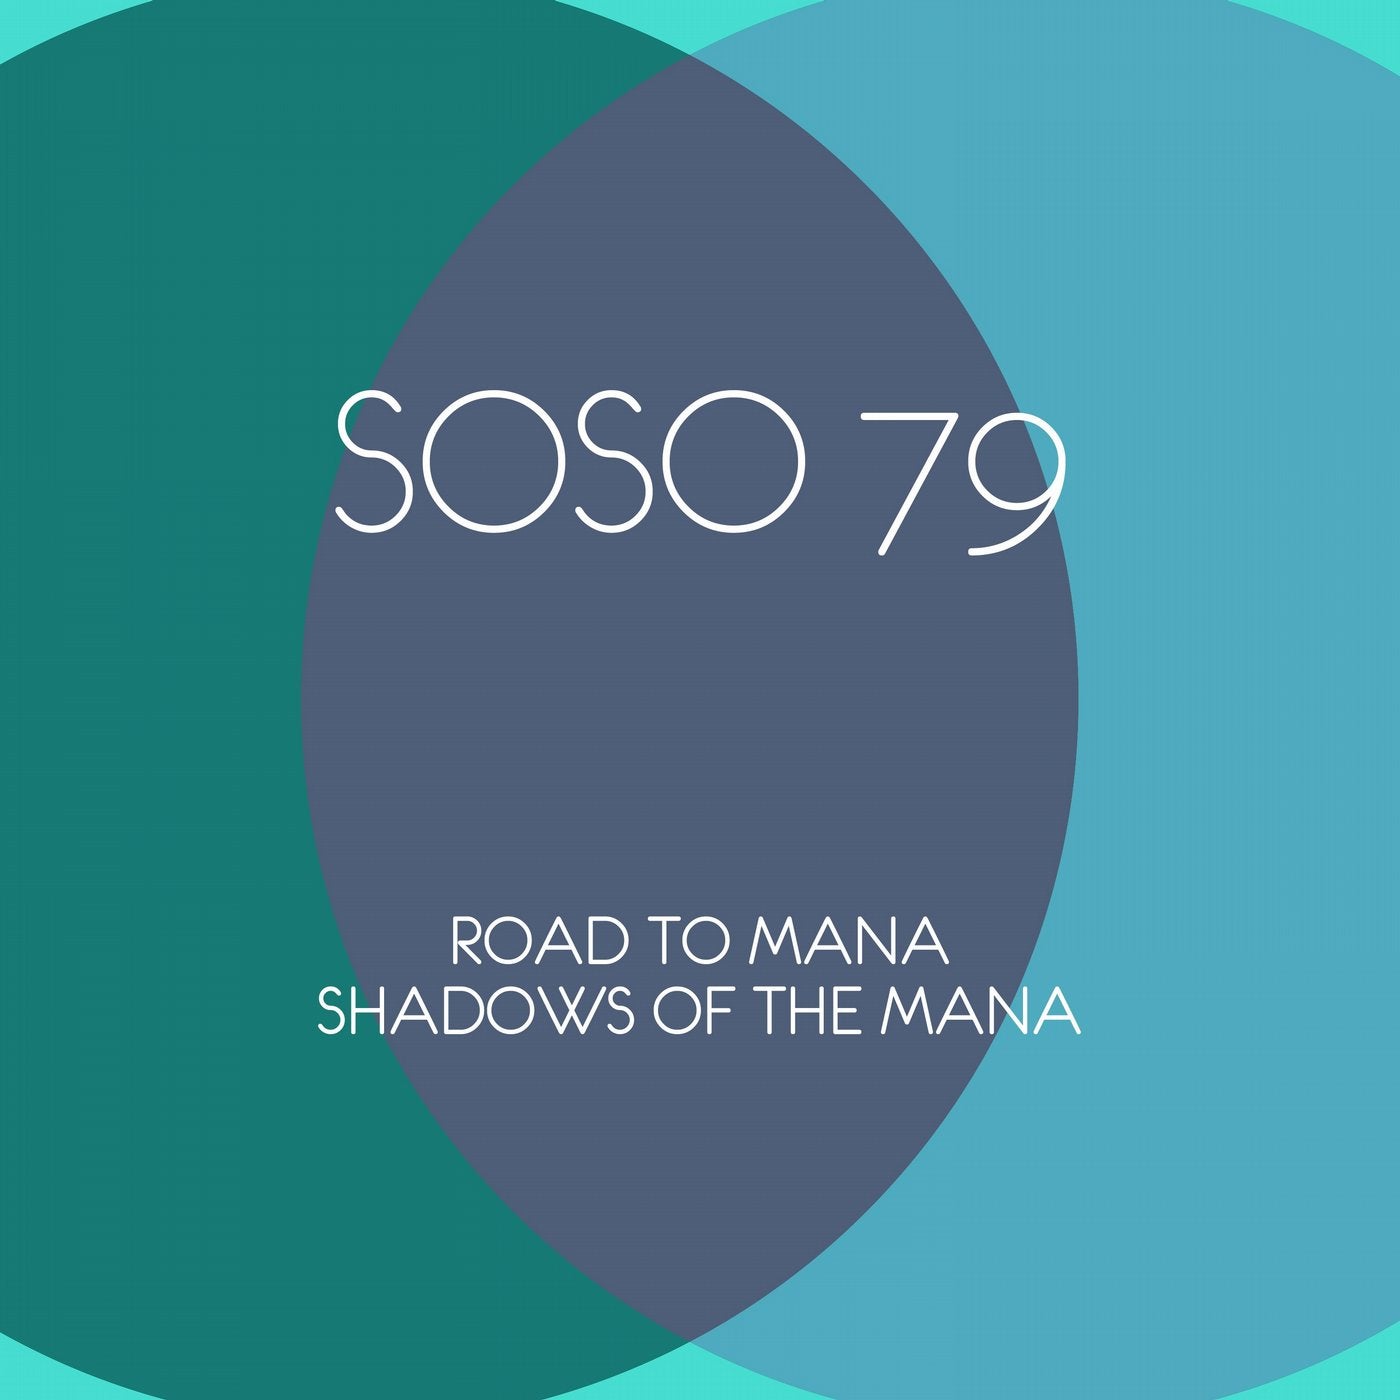 Shadows of the Mana